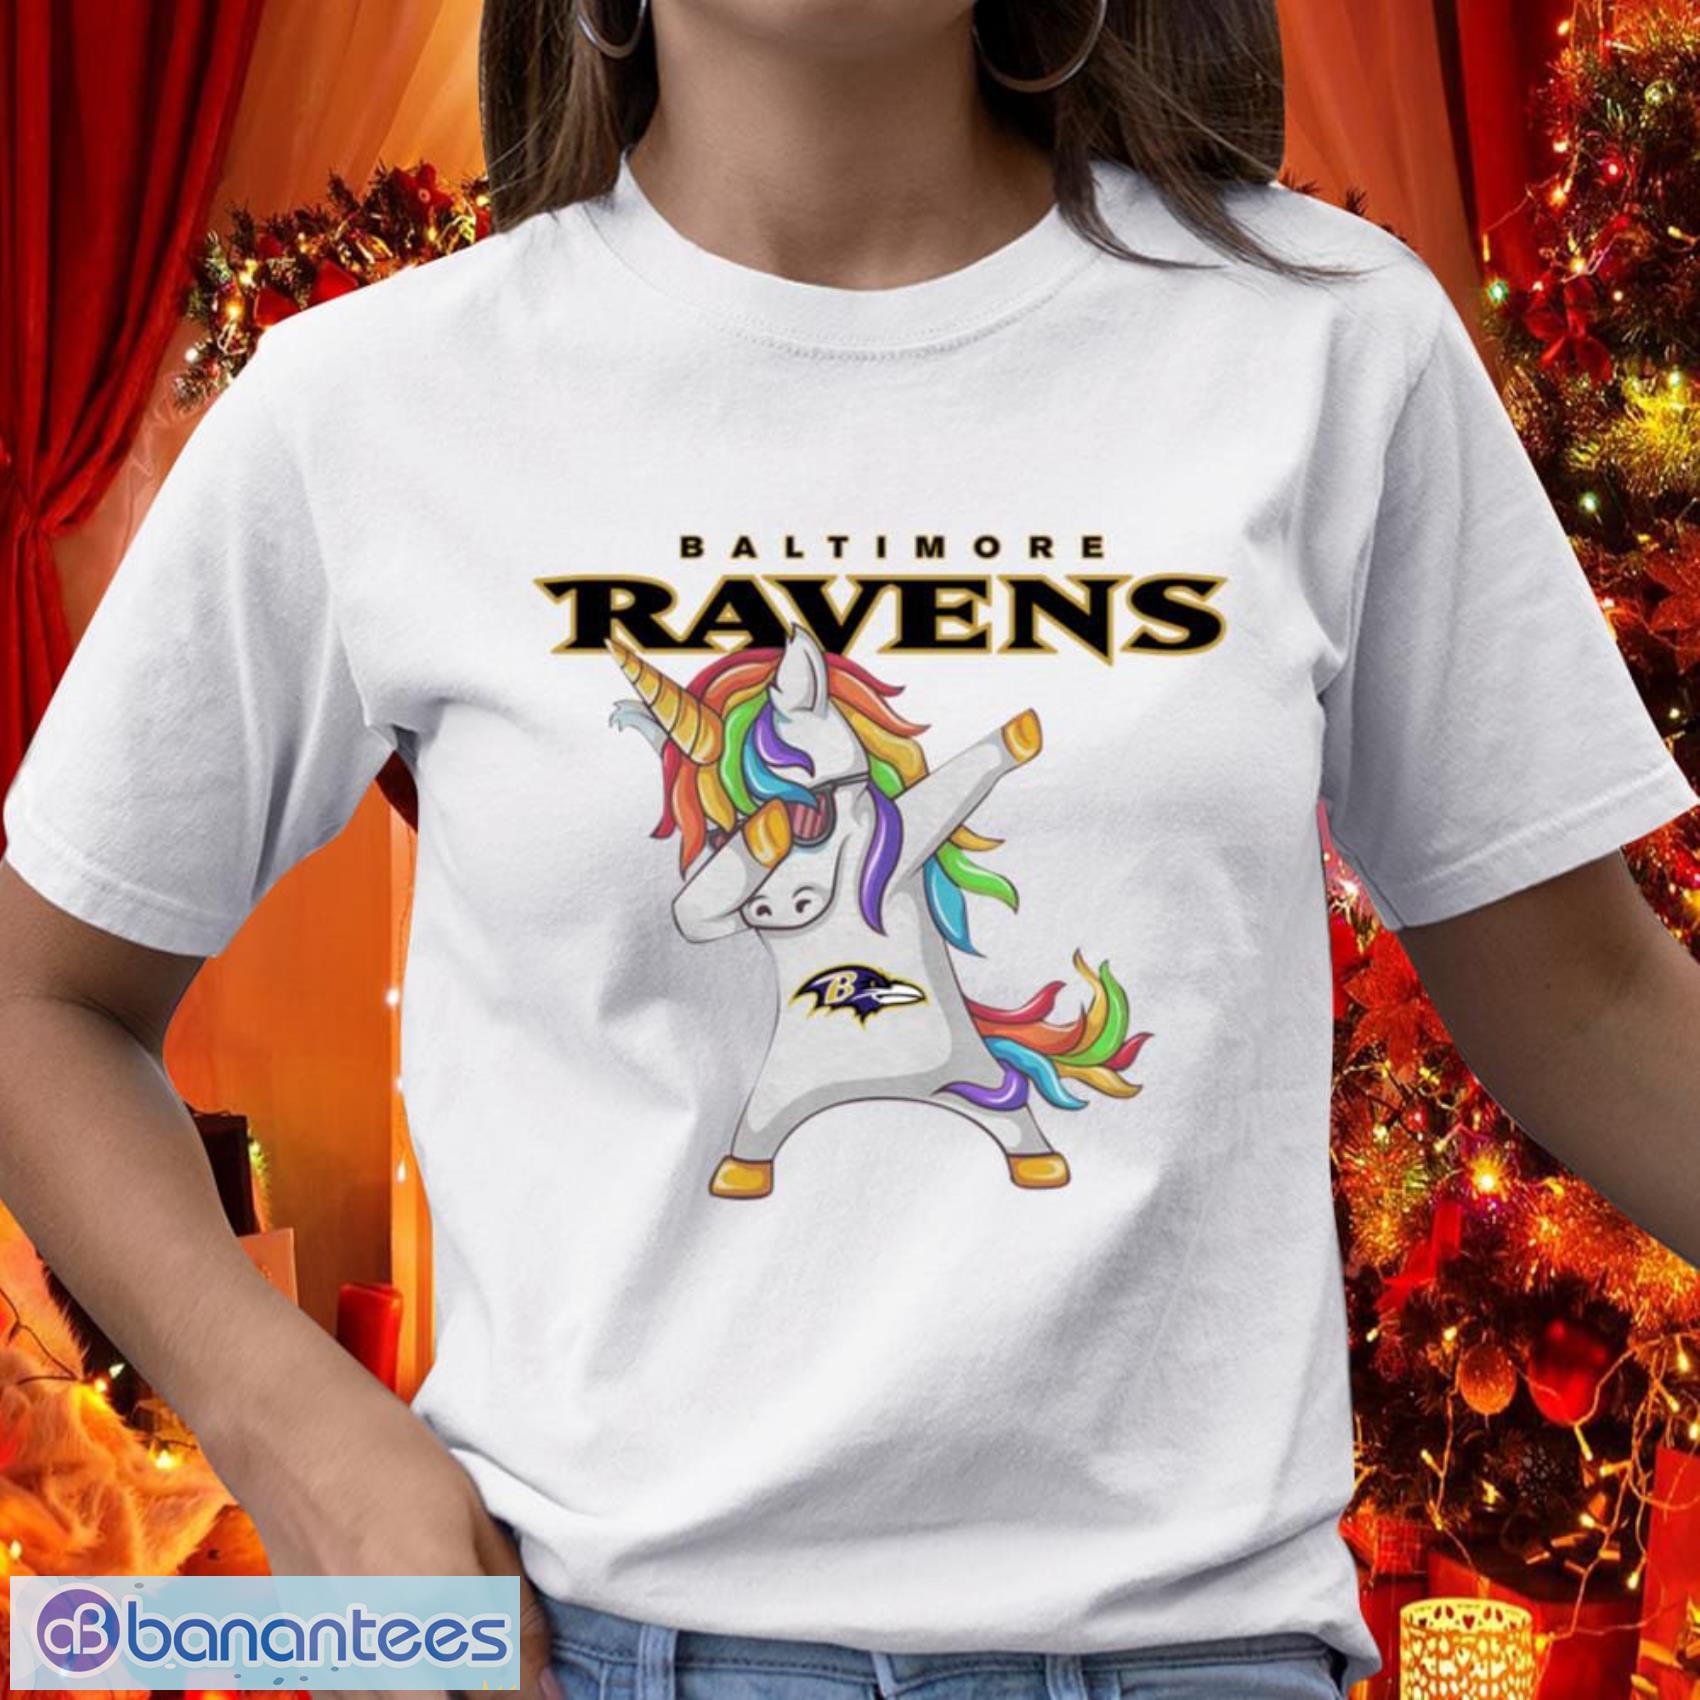 Baltimore Ravens NFL Football Gift Fr Fans Funny Unicorn Dabbing Sports T Shirt - Baltimore Ravens NFL Football Funny Unicorn Dabbing Sports T Shirt_1